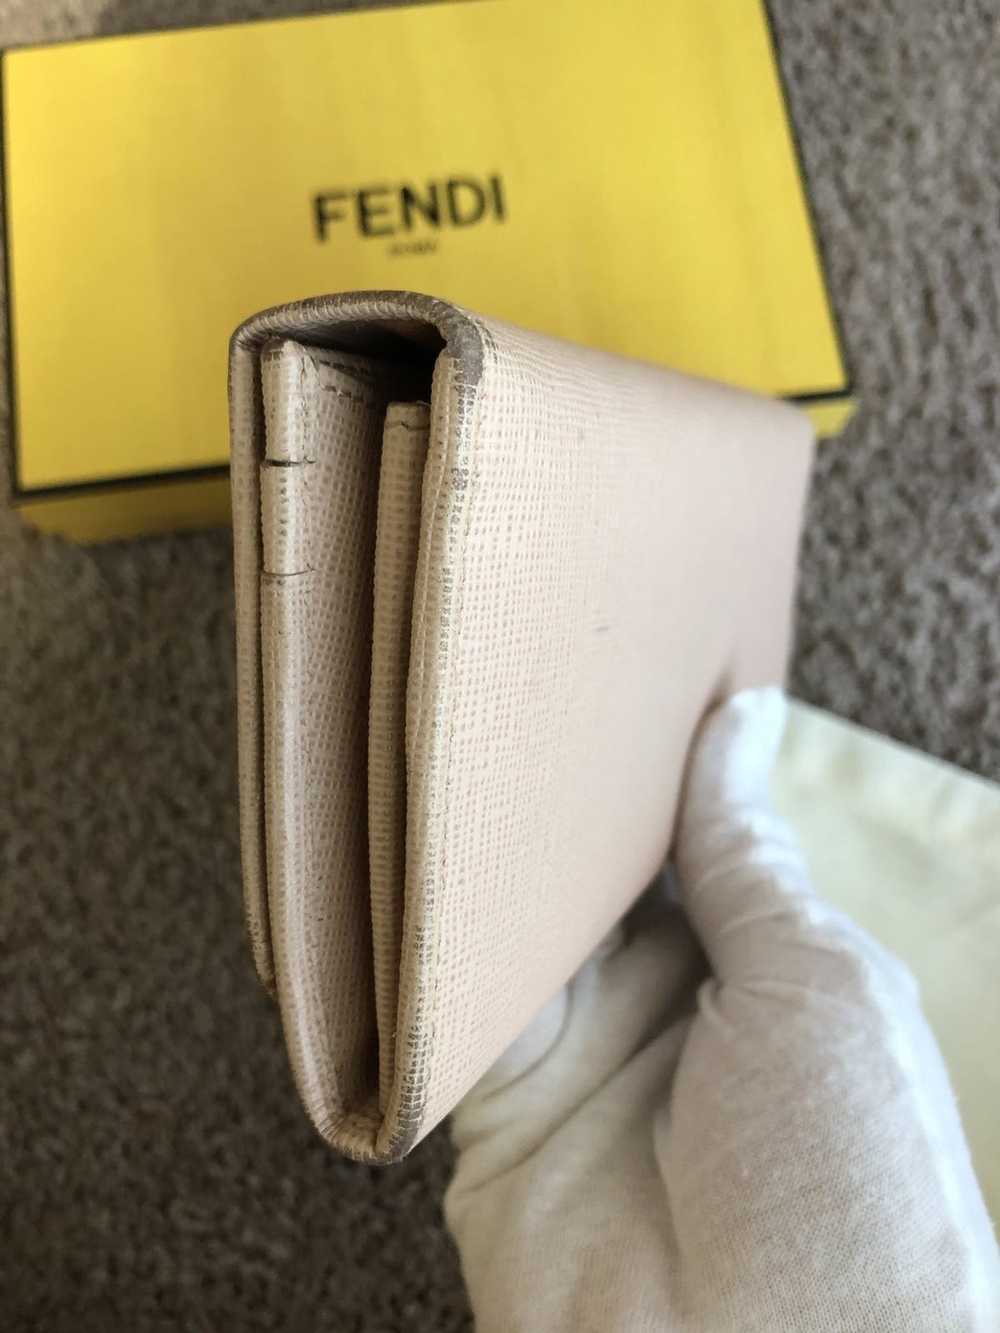 Fendi Fendi pink leather logo long wallet - image 8